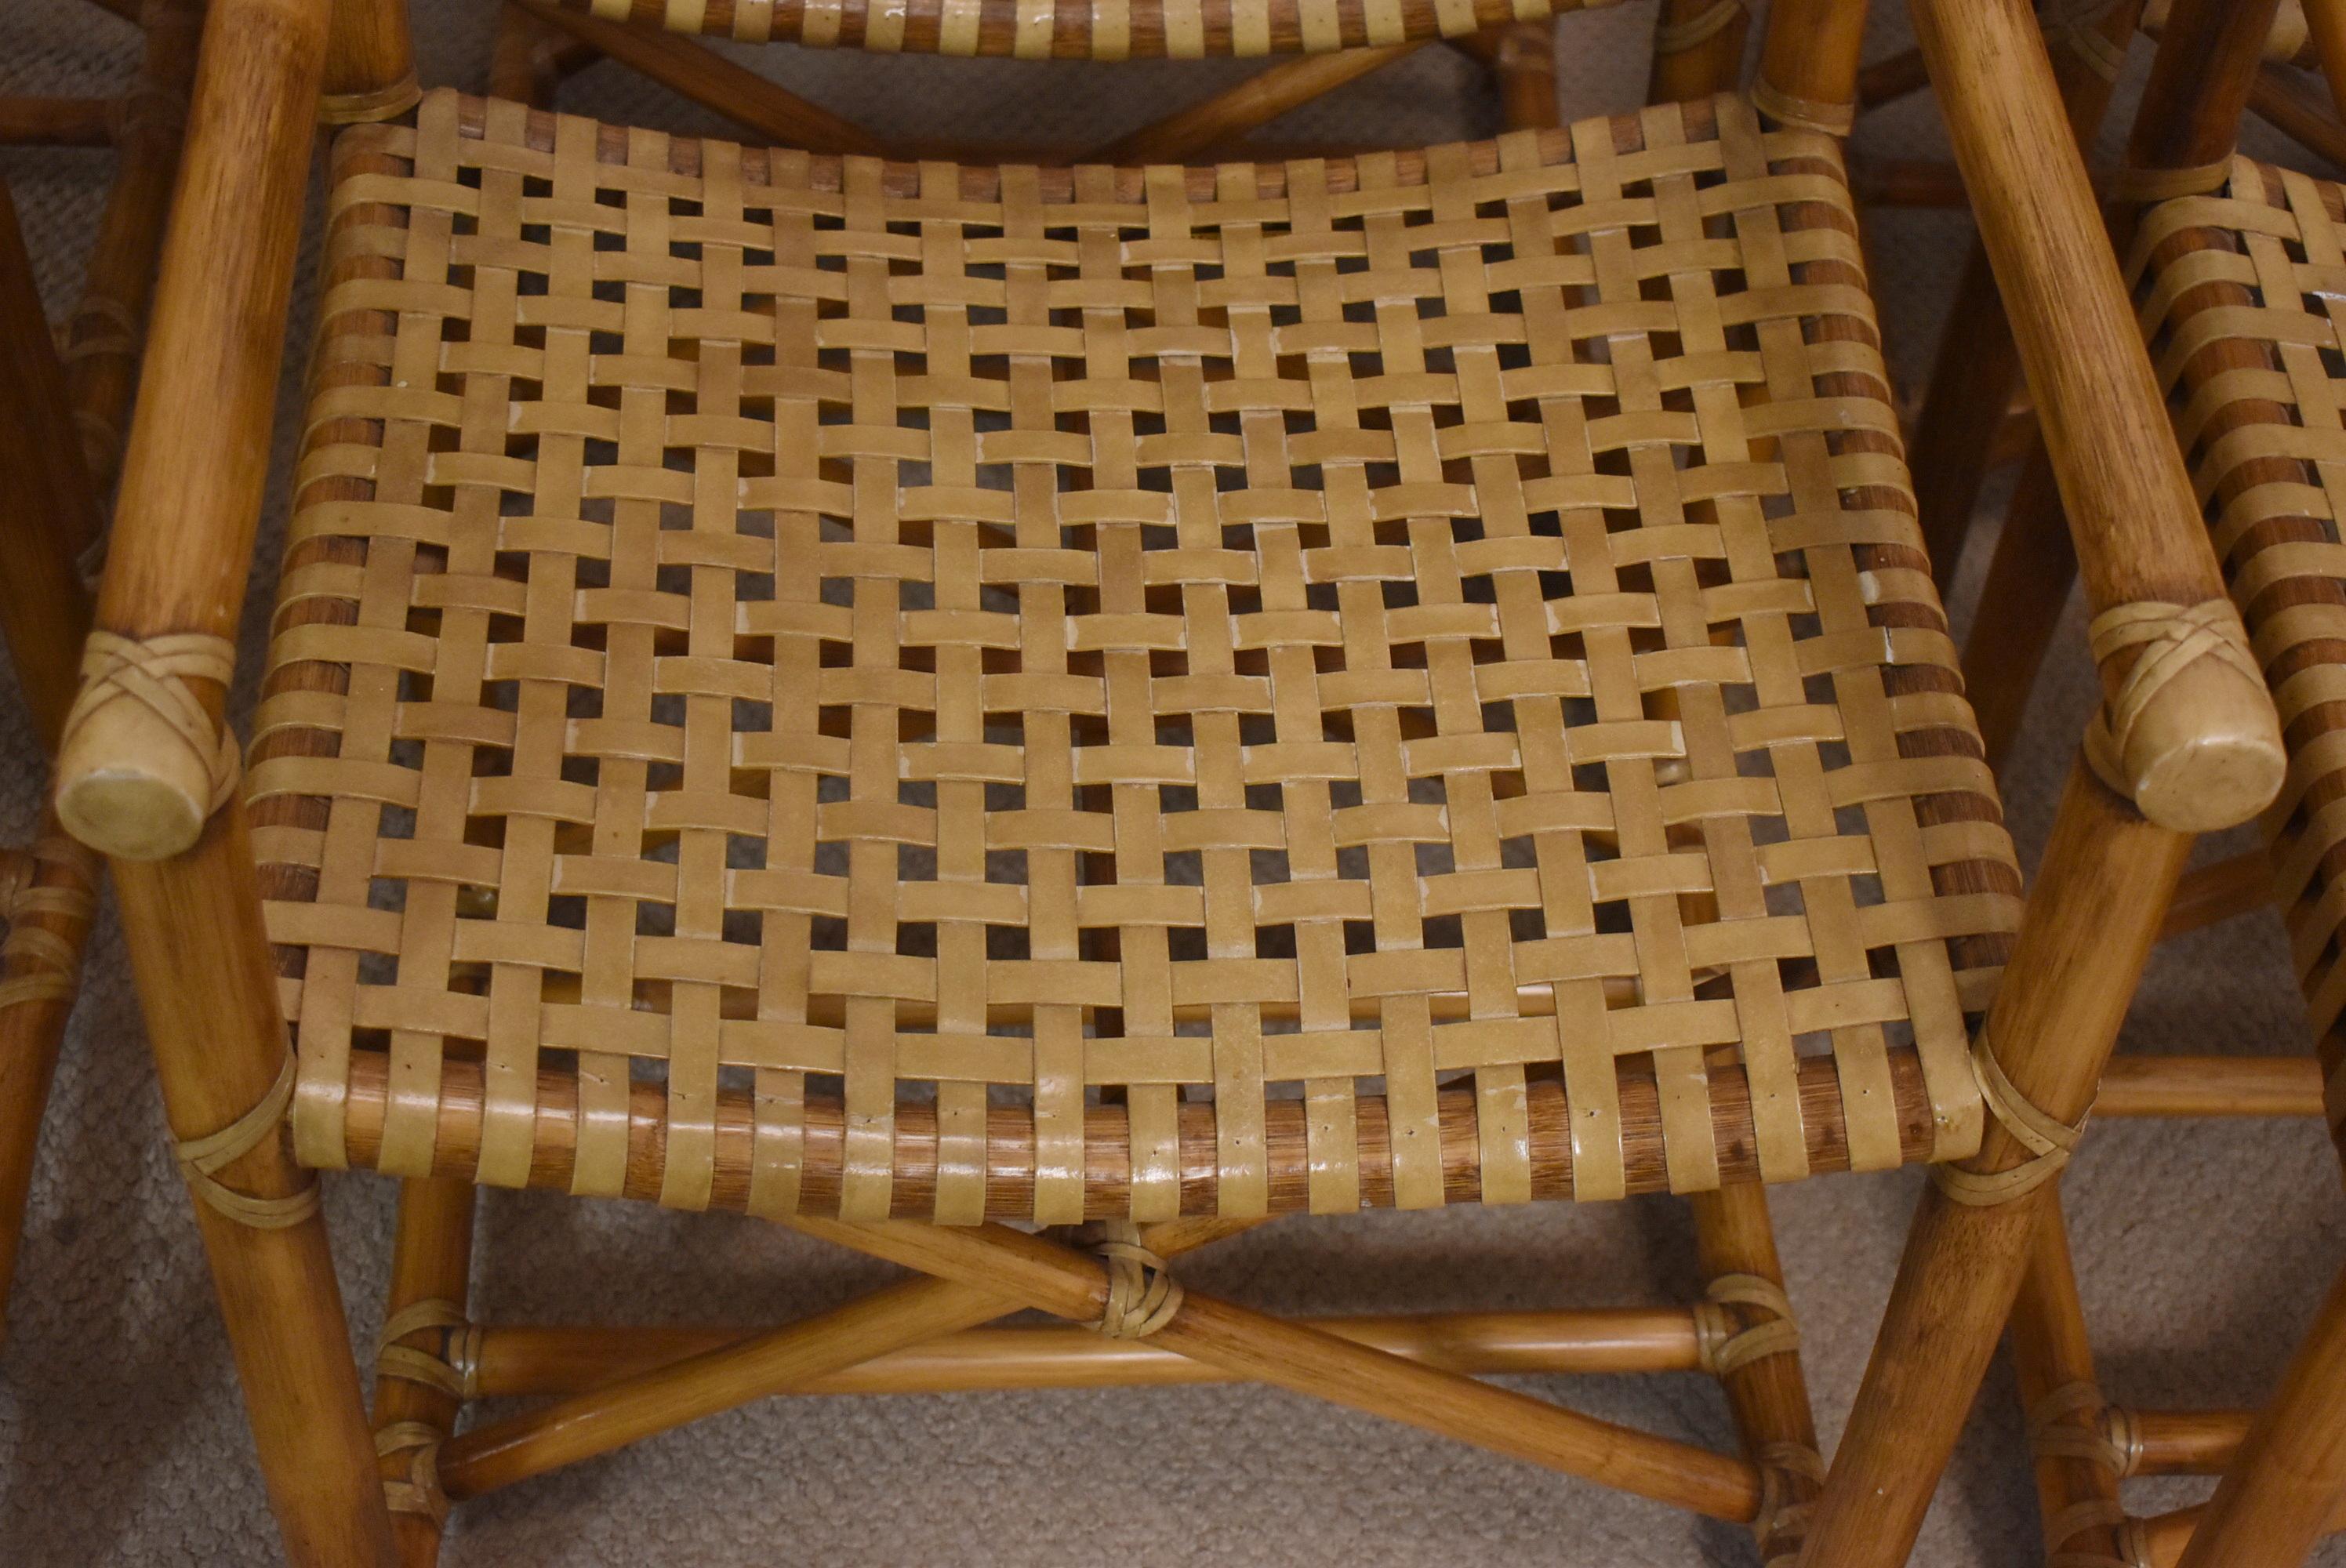 Six very nice bamboo & rawhide Antalya chairs by McGuire. Woven seats and backs.